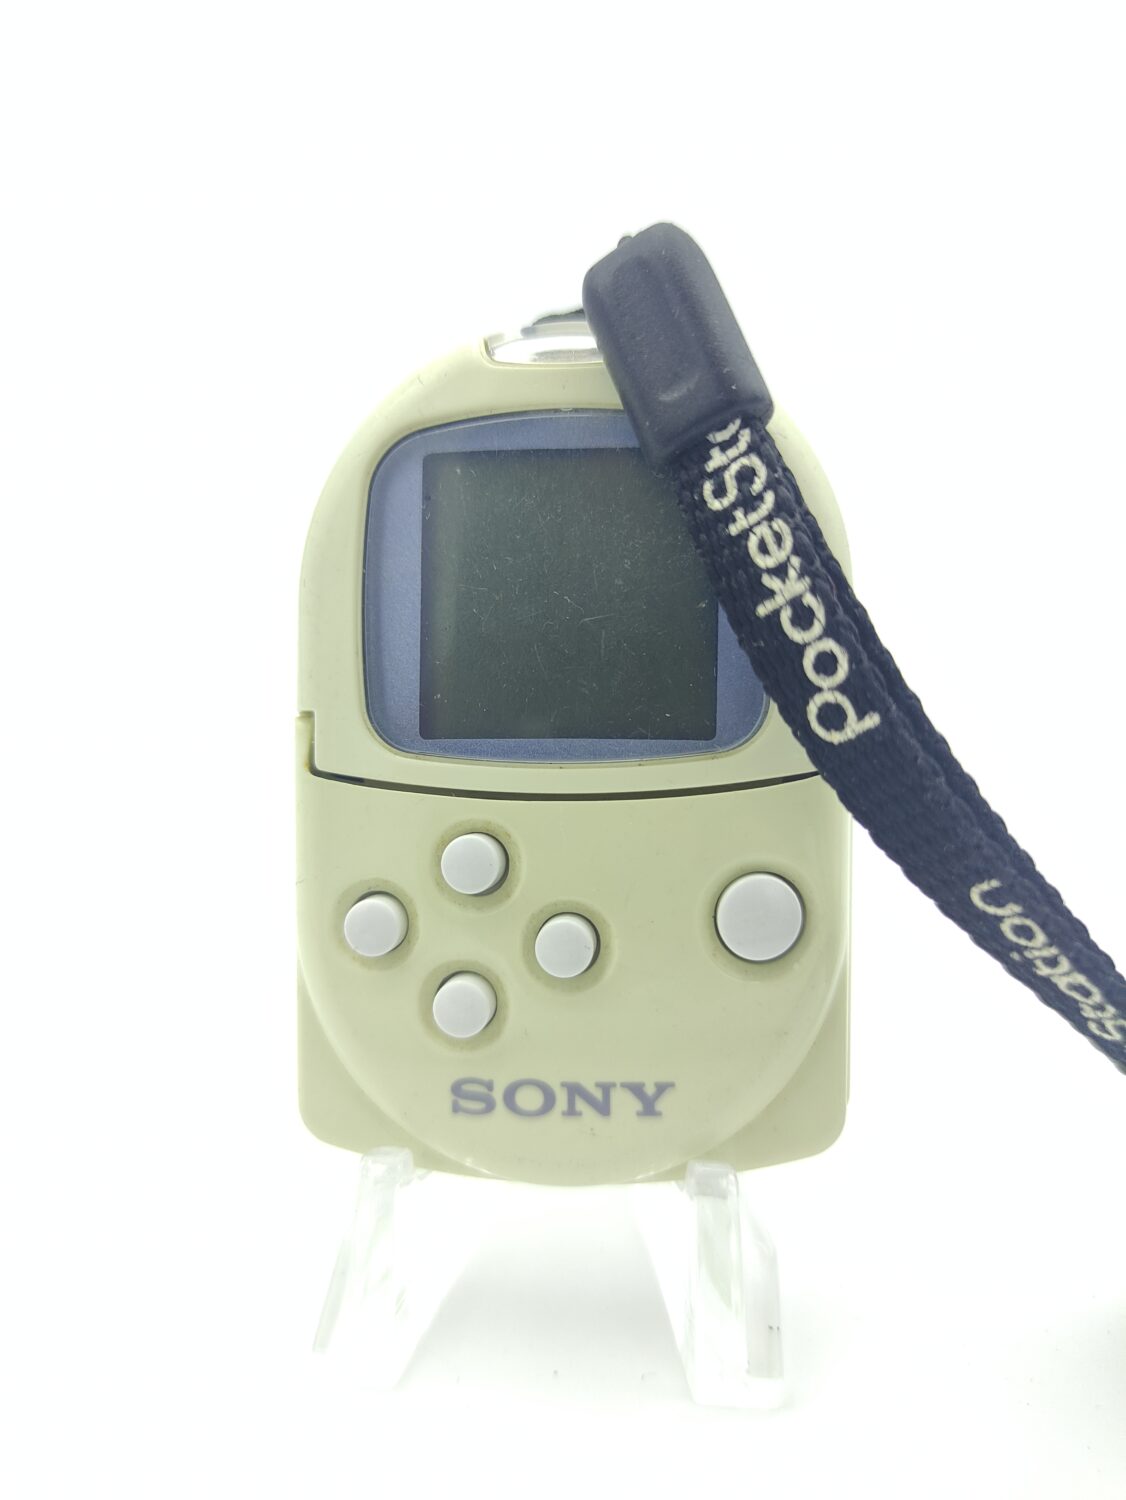 Sony Pocket Station memory card White SCPH-4000 Japan